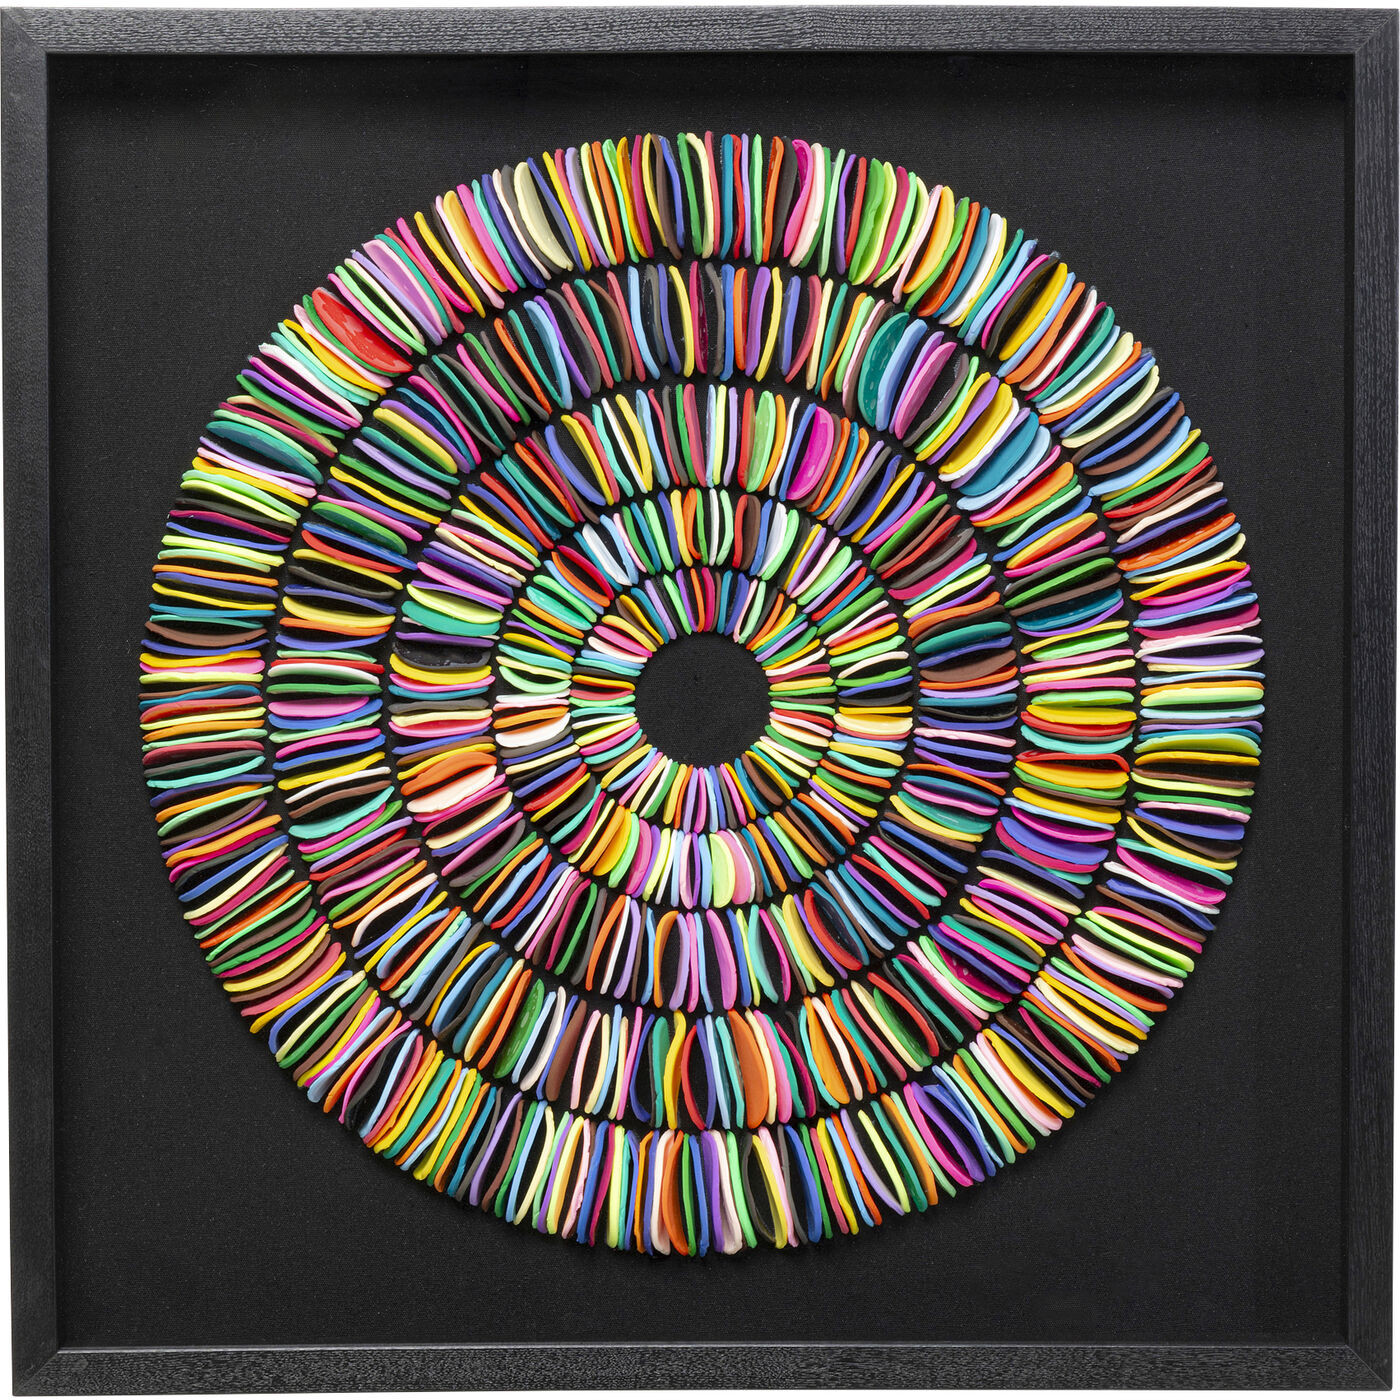 Object Schilderij Pasta Colore Circles 80x80cm Kare Design Beeld 55862